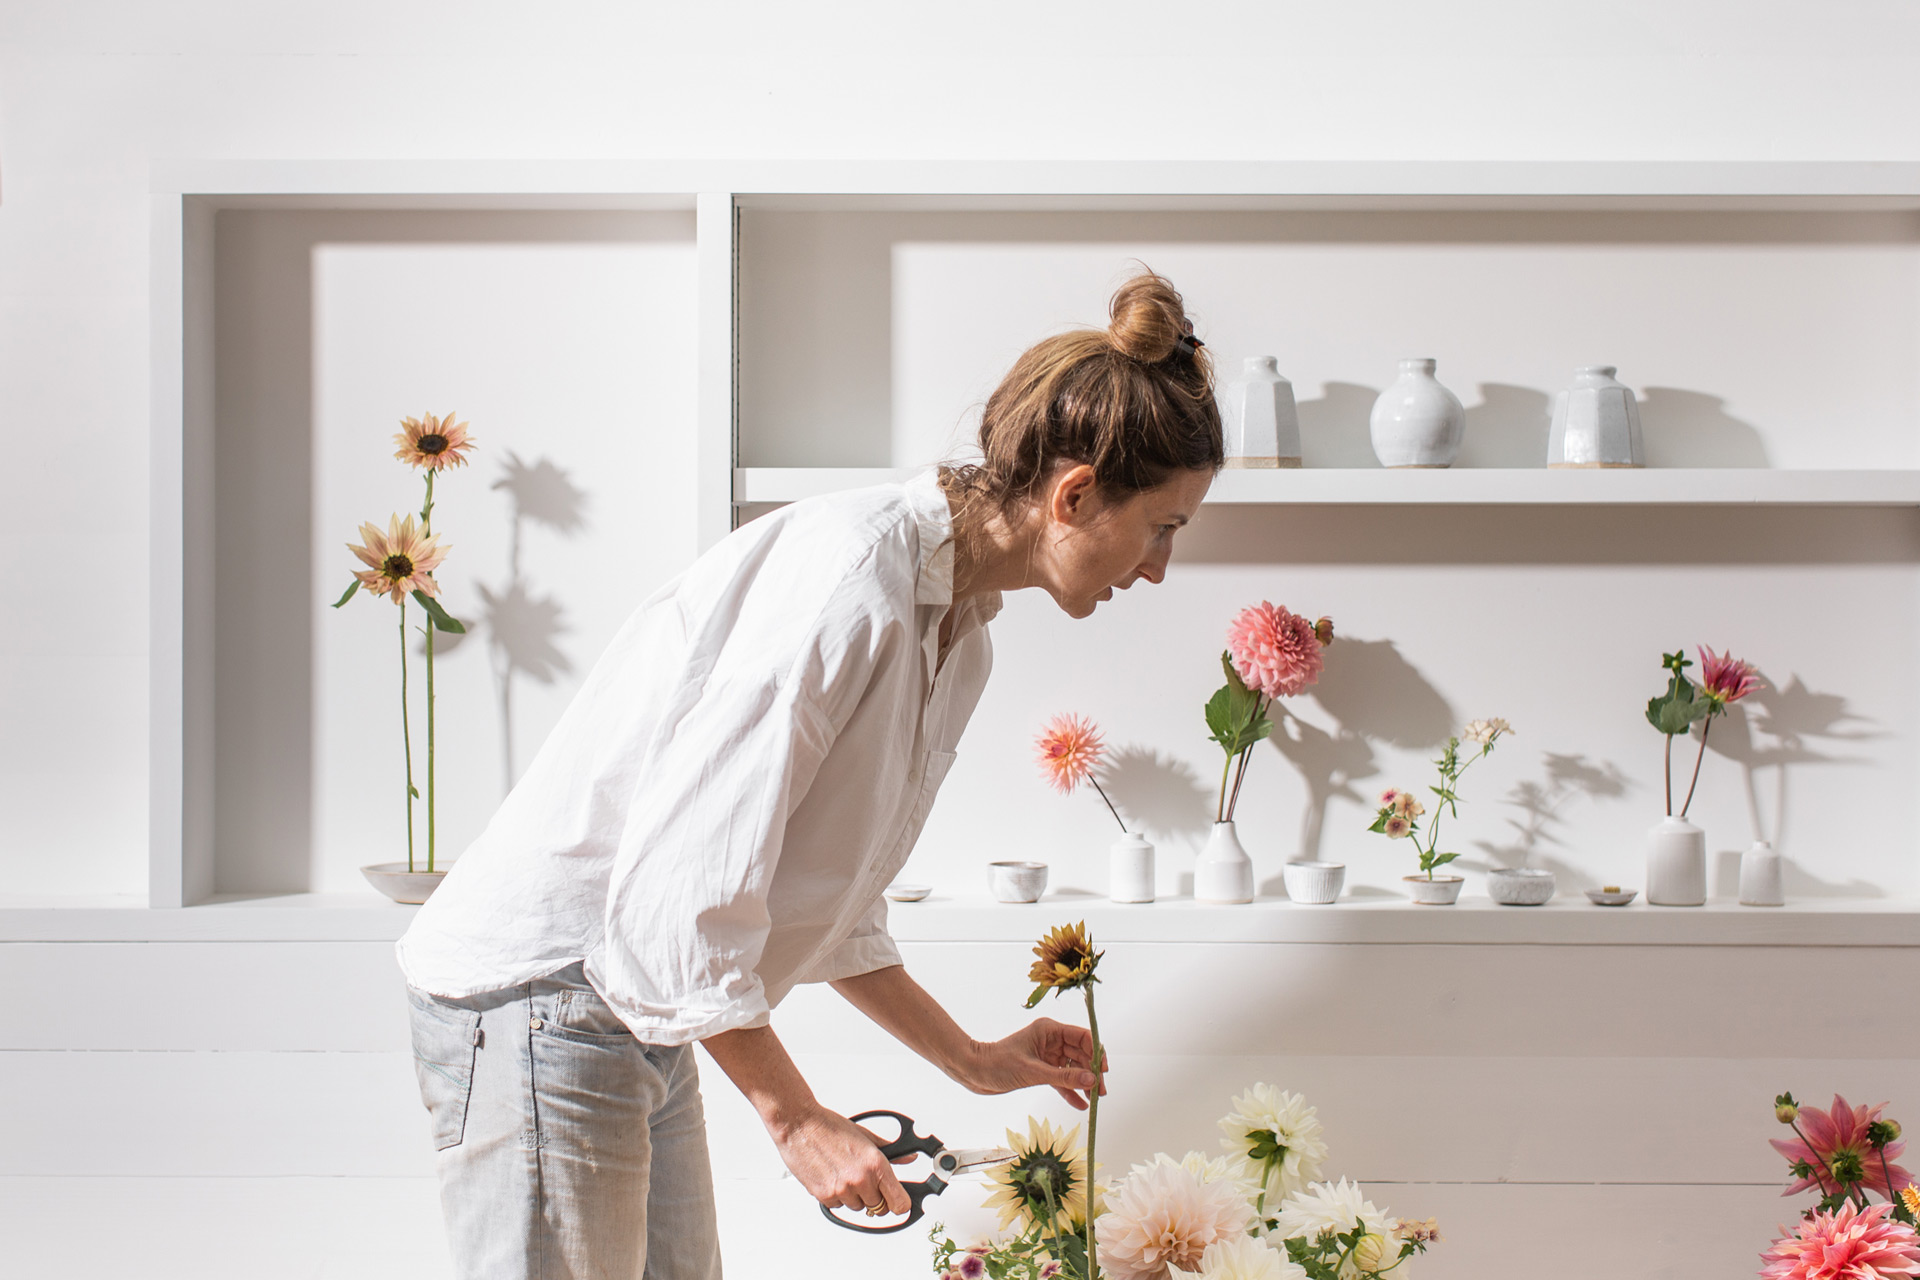 Stephanie Woolvett wearing a white shirt cutting flower stems